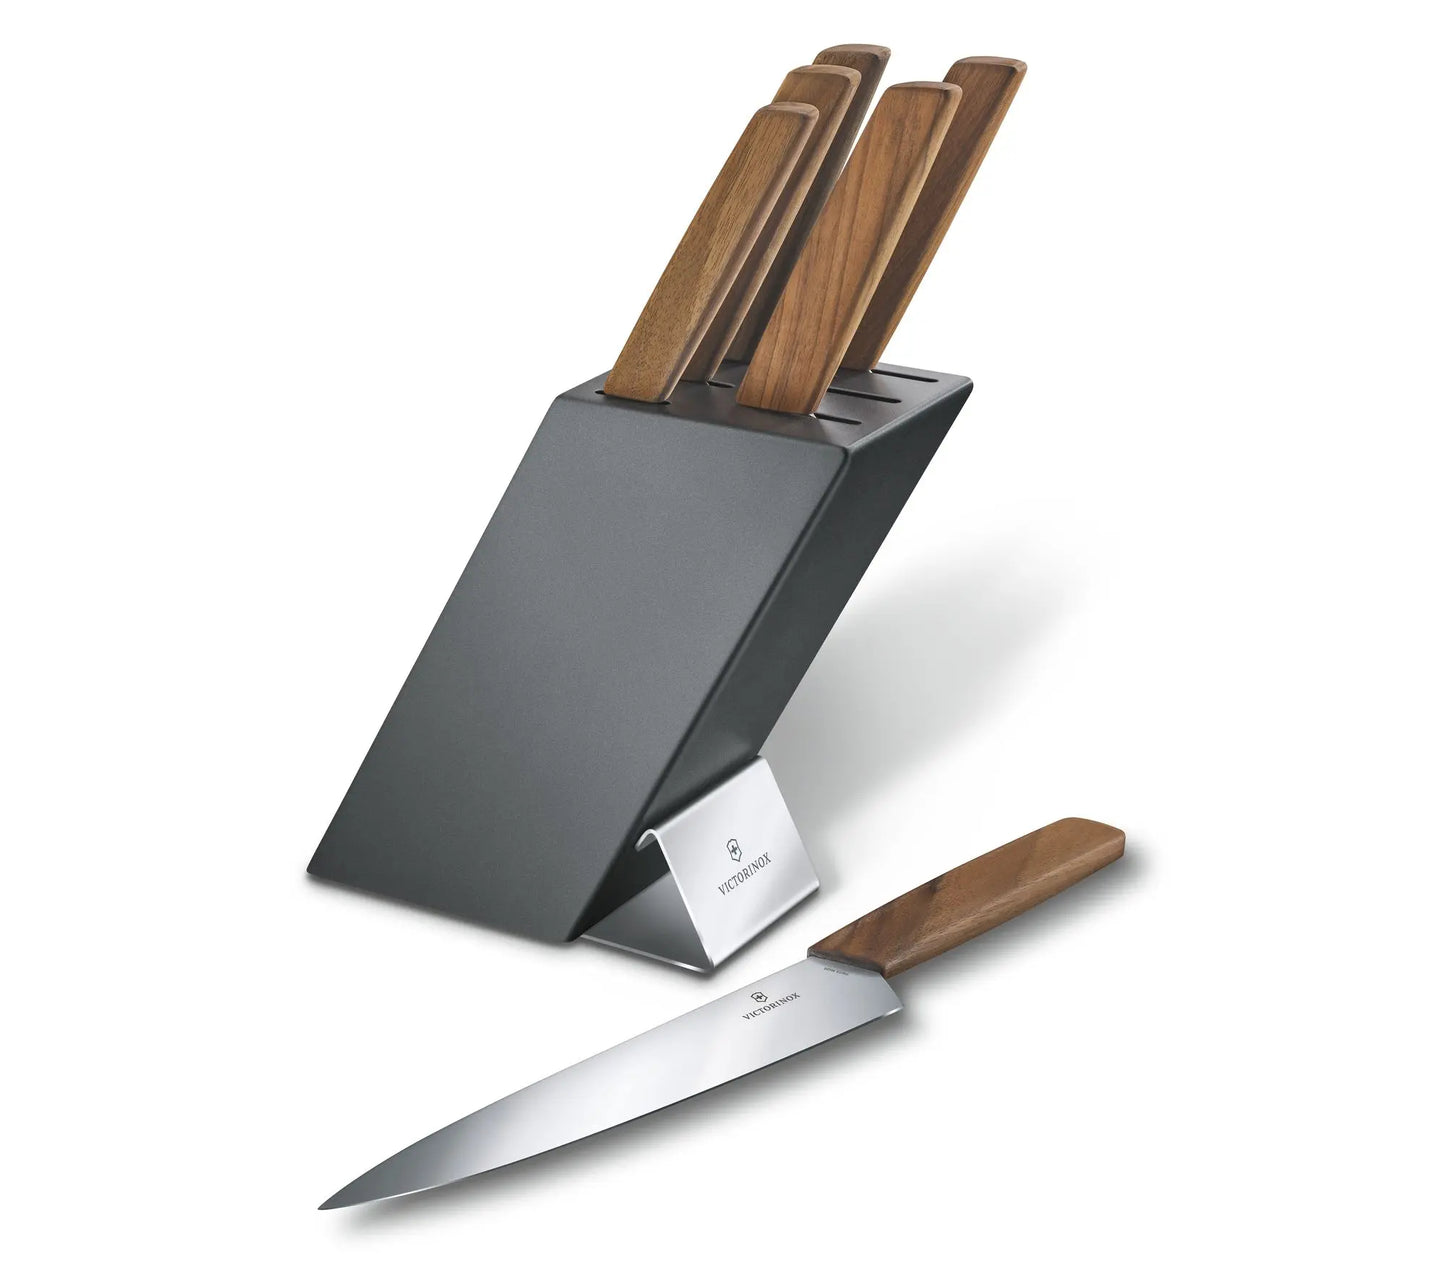 Victorinox Swiss Modern Walnut 6 Piece Cutlery Knife Block